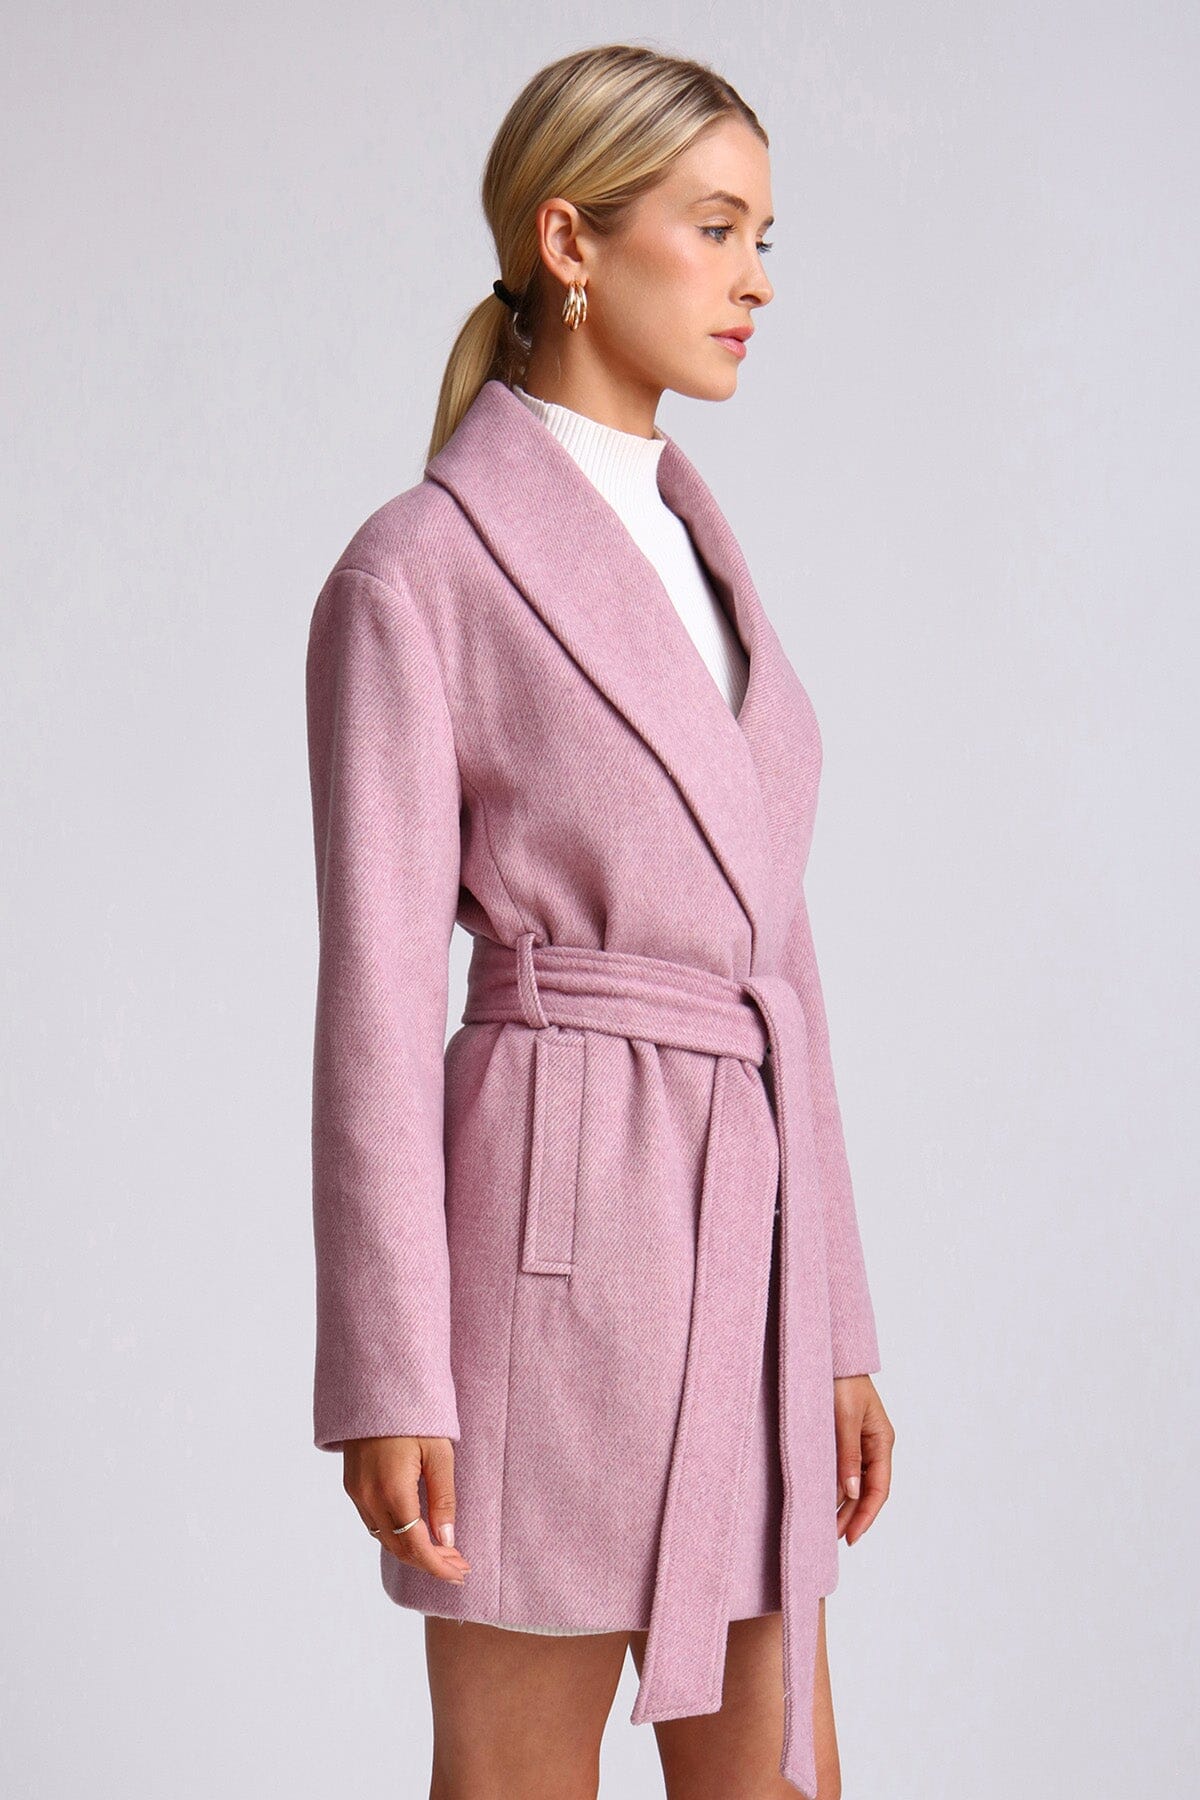 Light purple wool blend belted shawl collar peacoat coat - women's figure flattering cute peacoats coats for fall